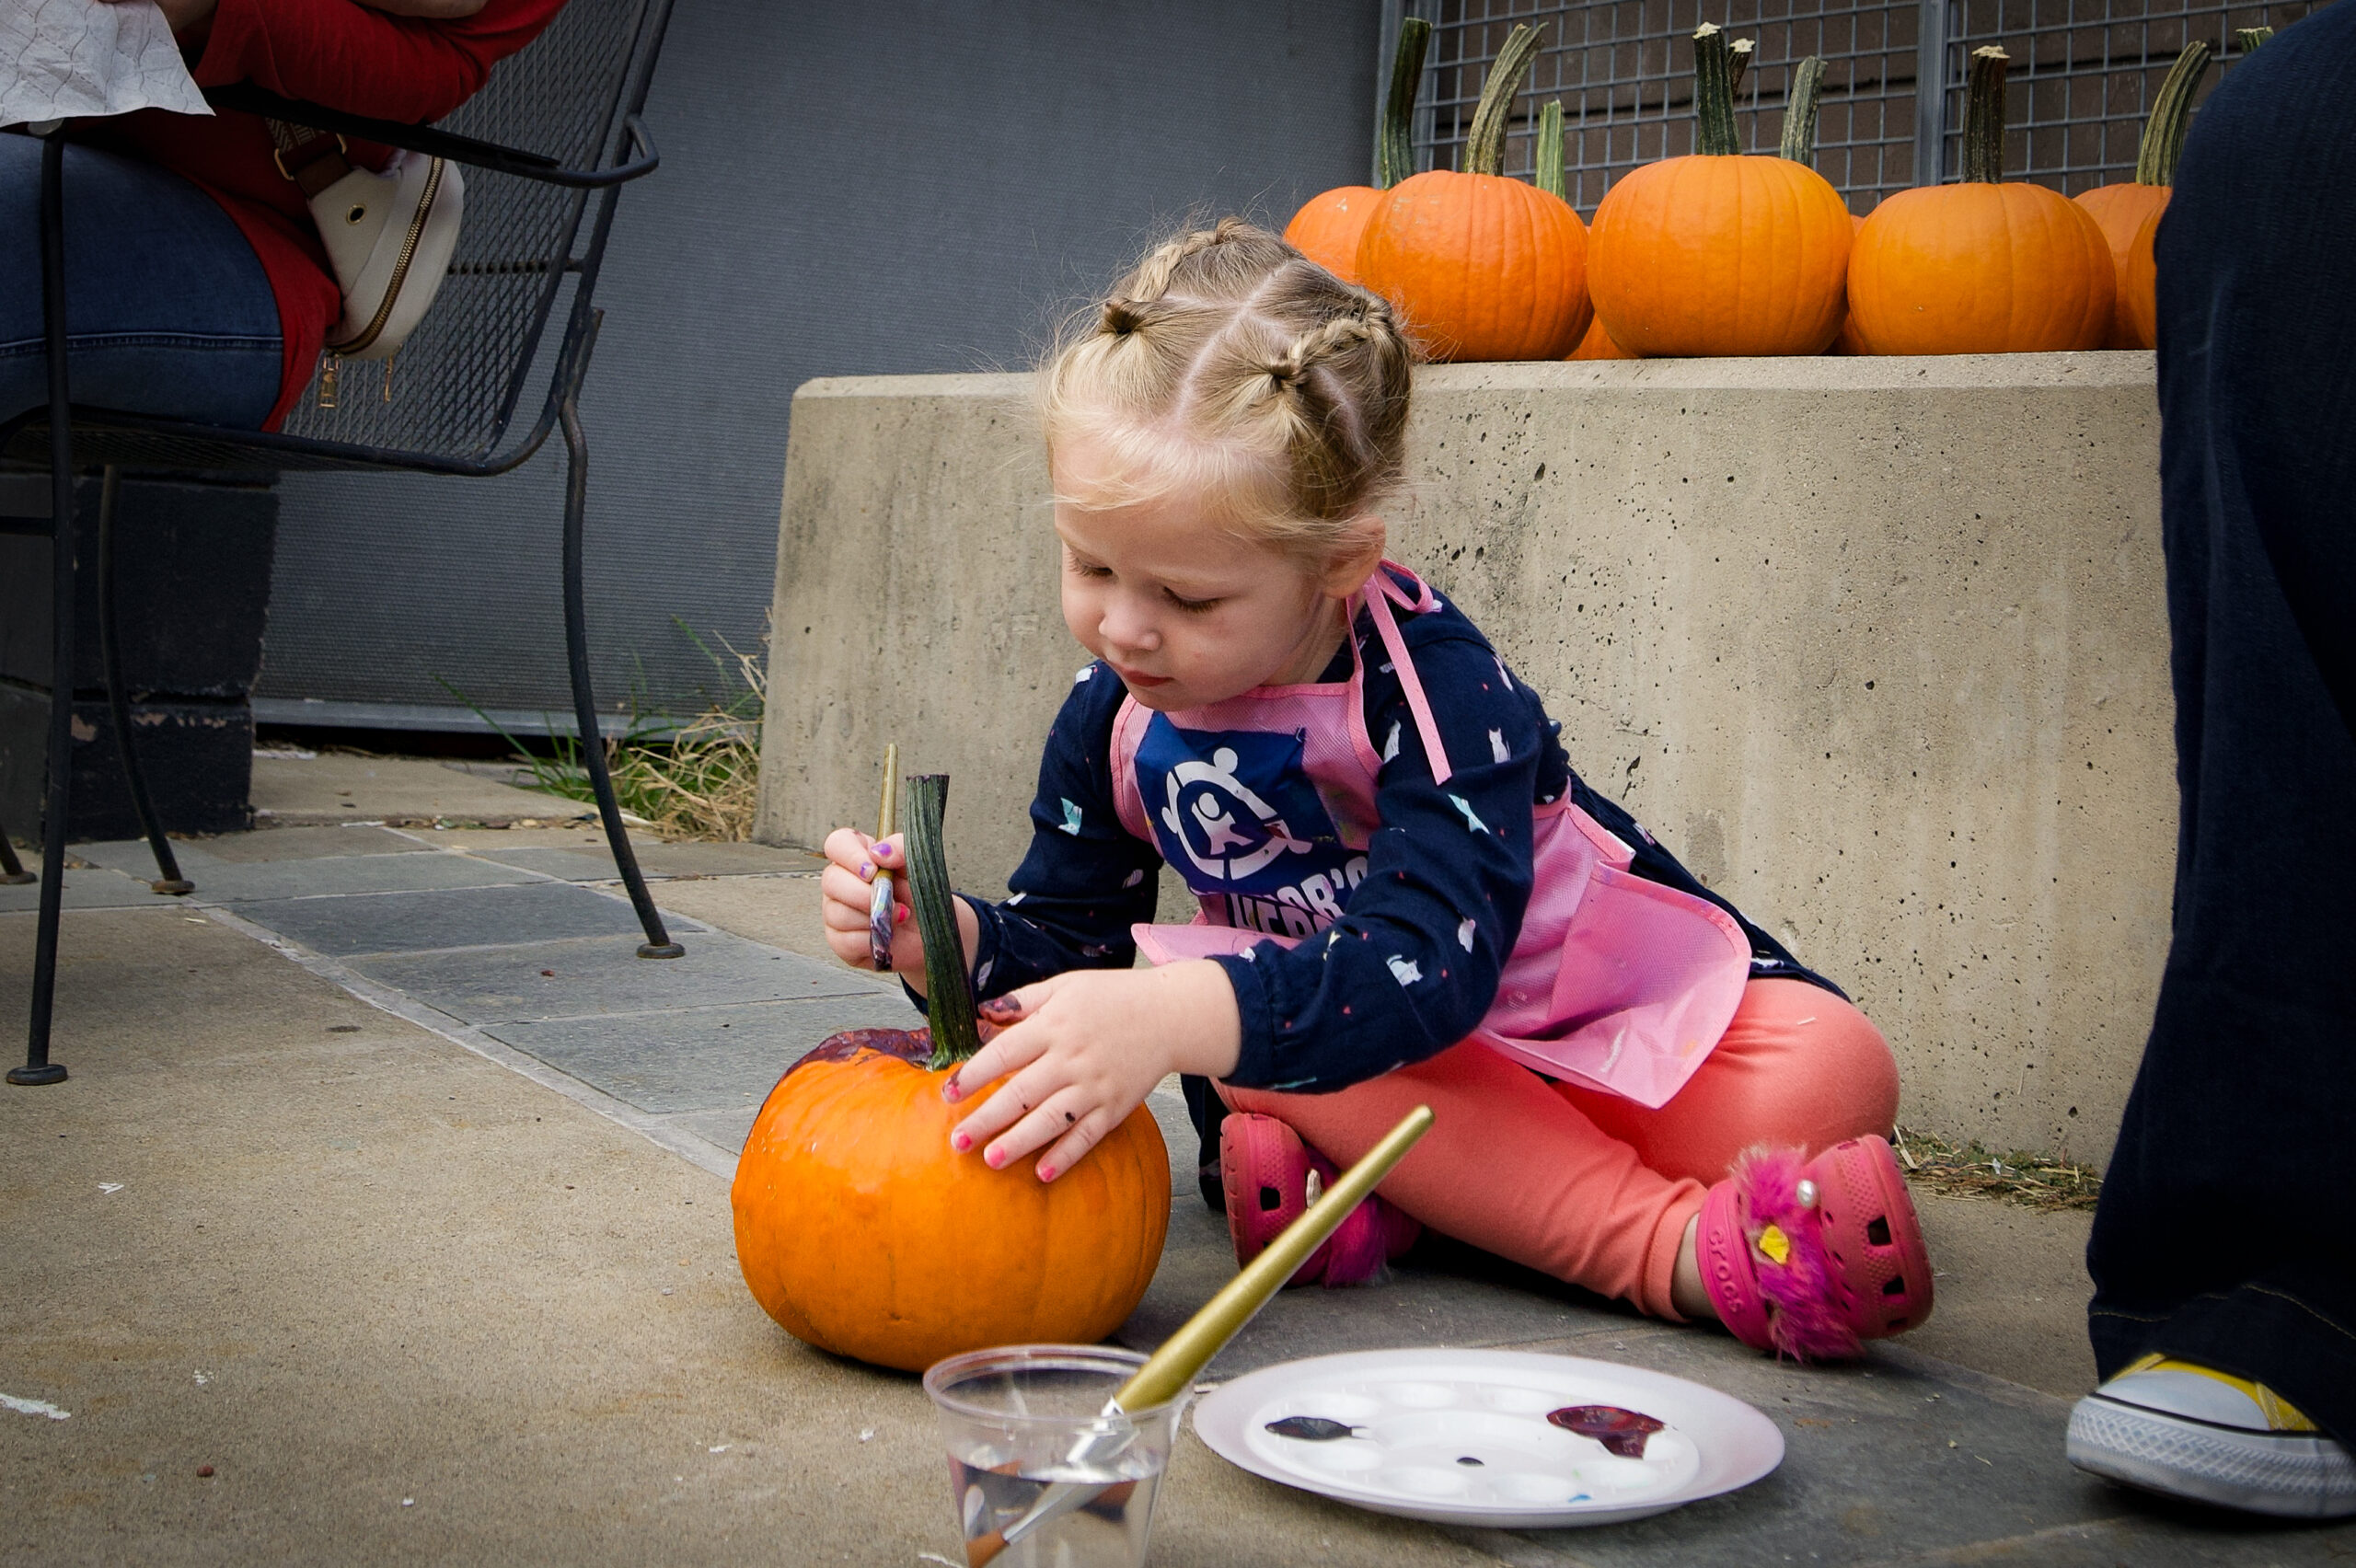 A girl is painting a pumpkin purple